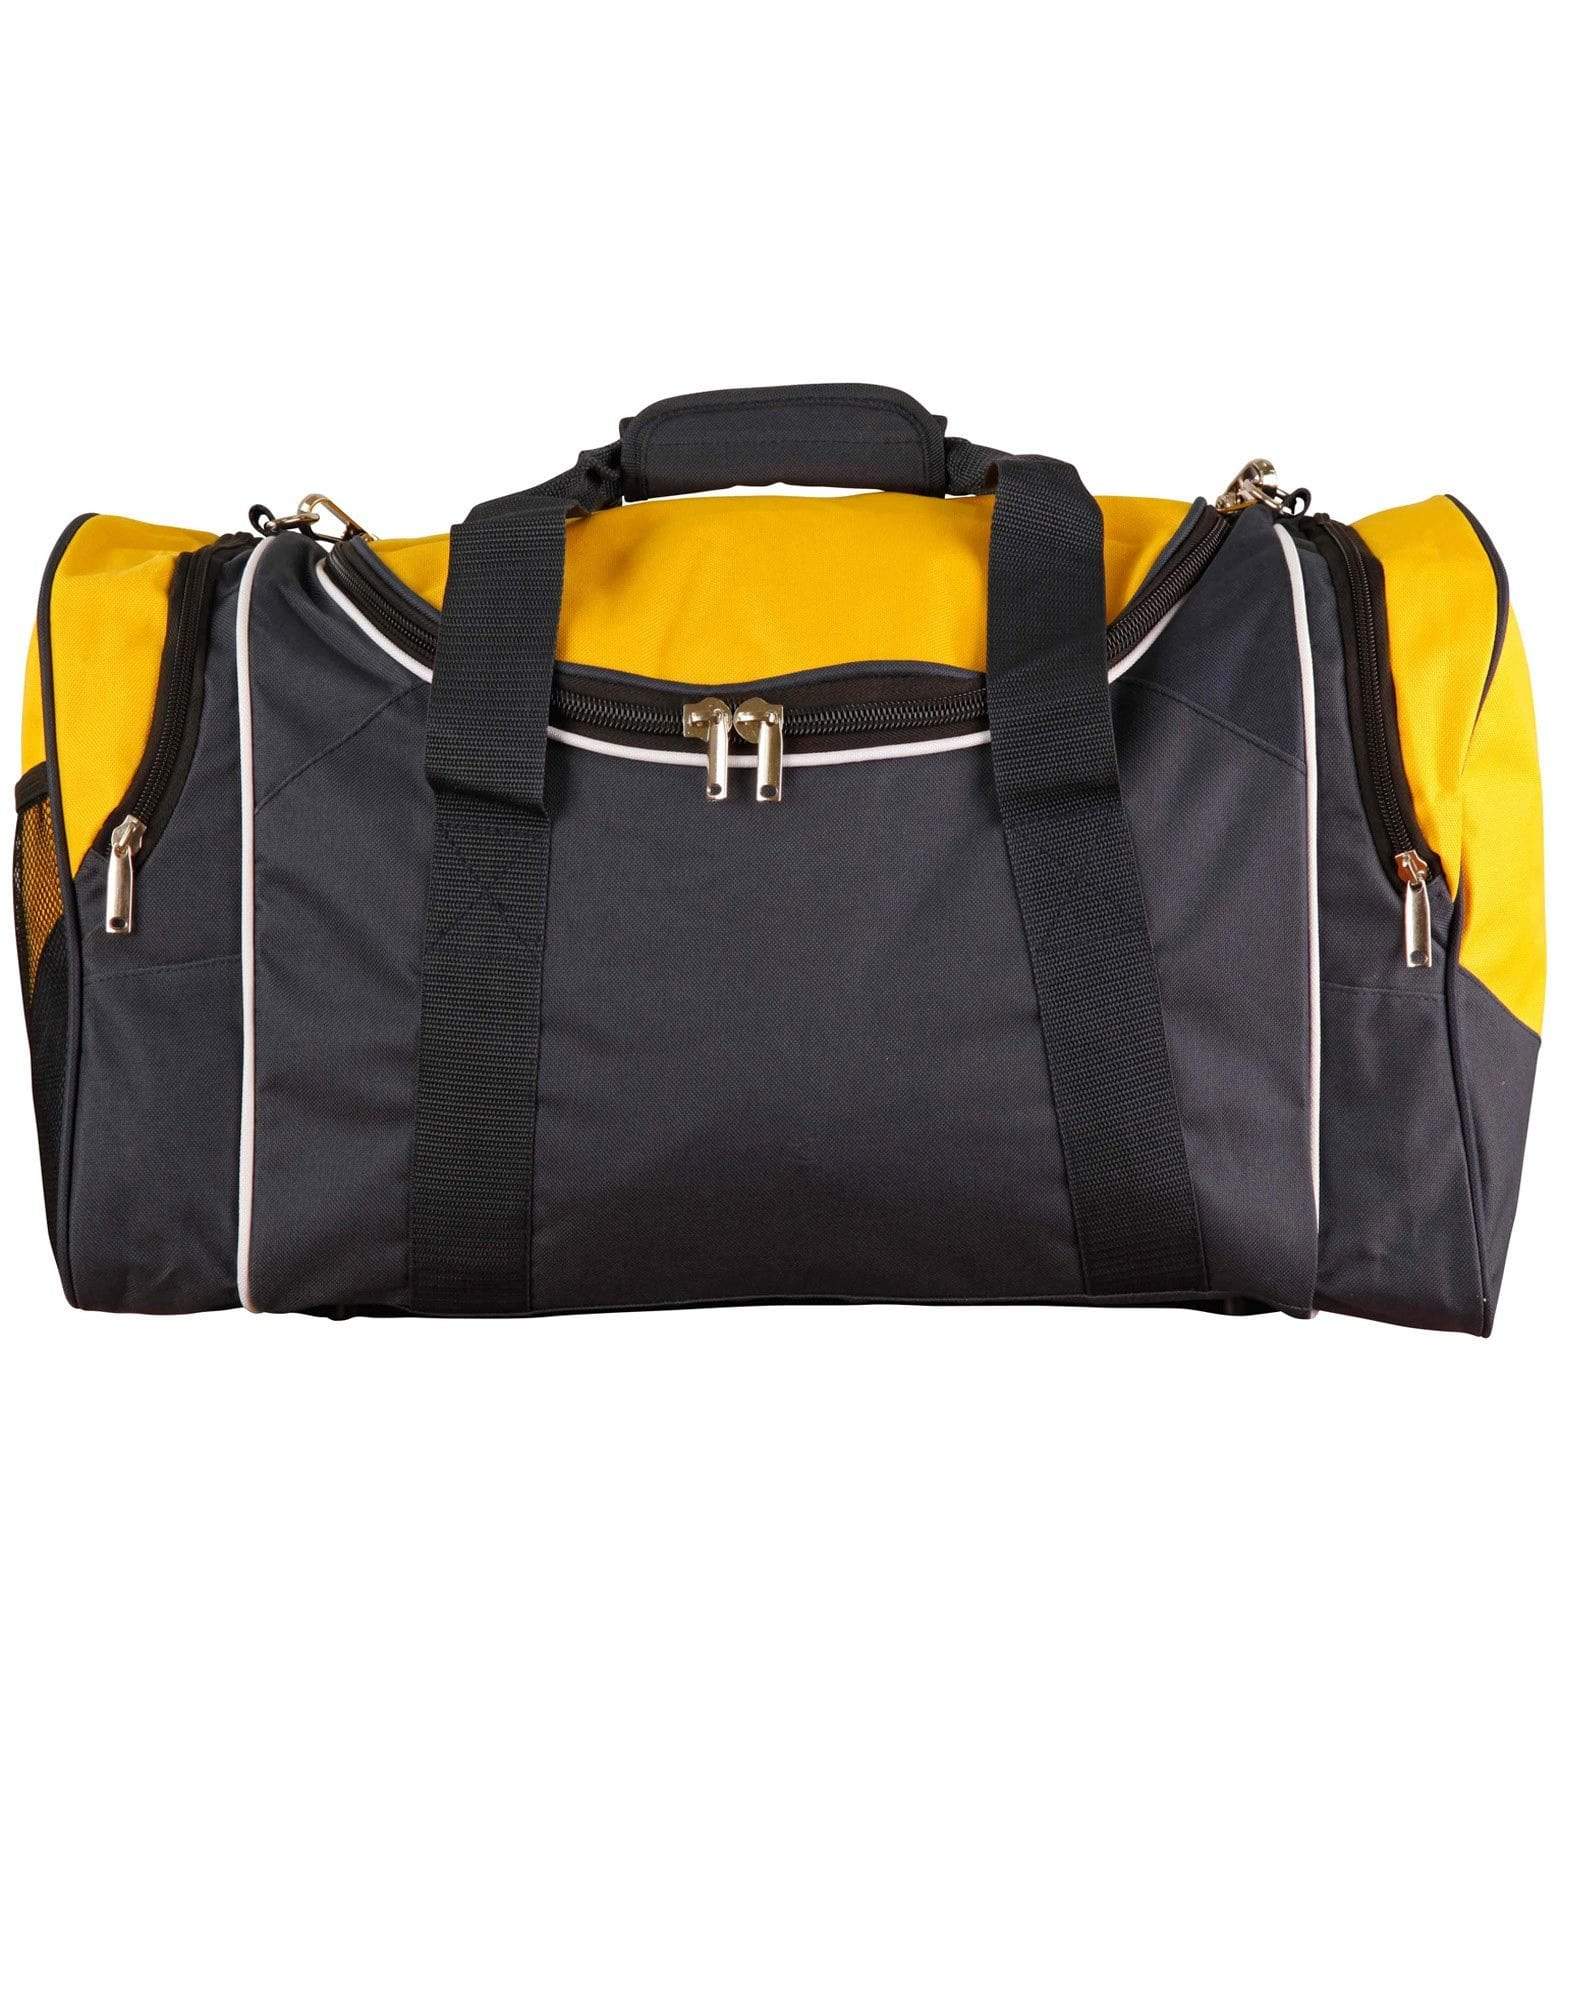 Winner Sports/ Travel Bag B2020 Active Wear Winning Spirit Navy/White/Gold "(w)65cm x (h)32cm x (d)27cm, 56.2 Litres Capacity" 